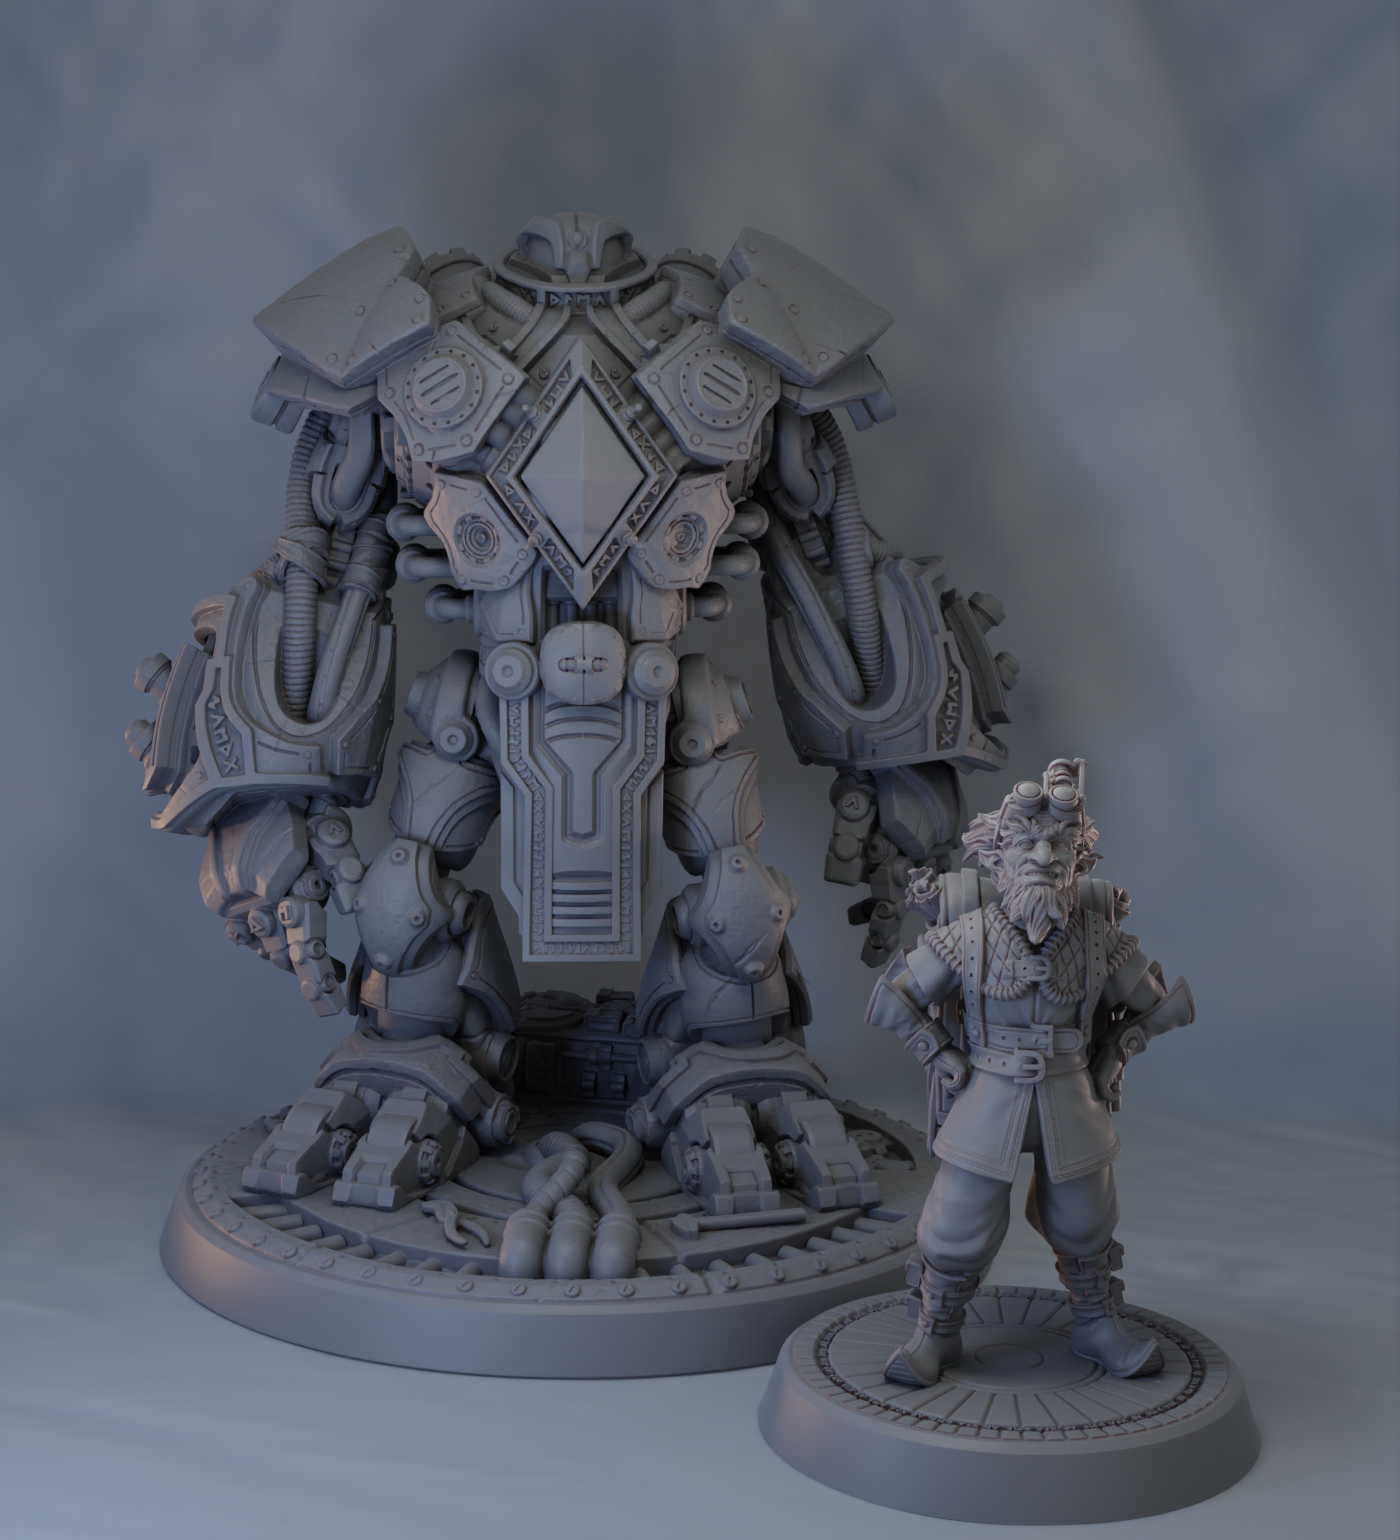 Gnome Artificer Defender Miniatur - Collective Studio